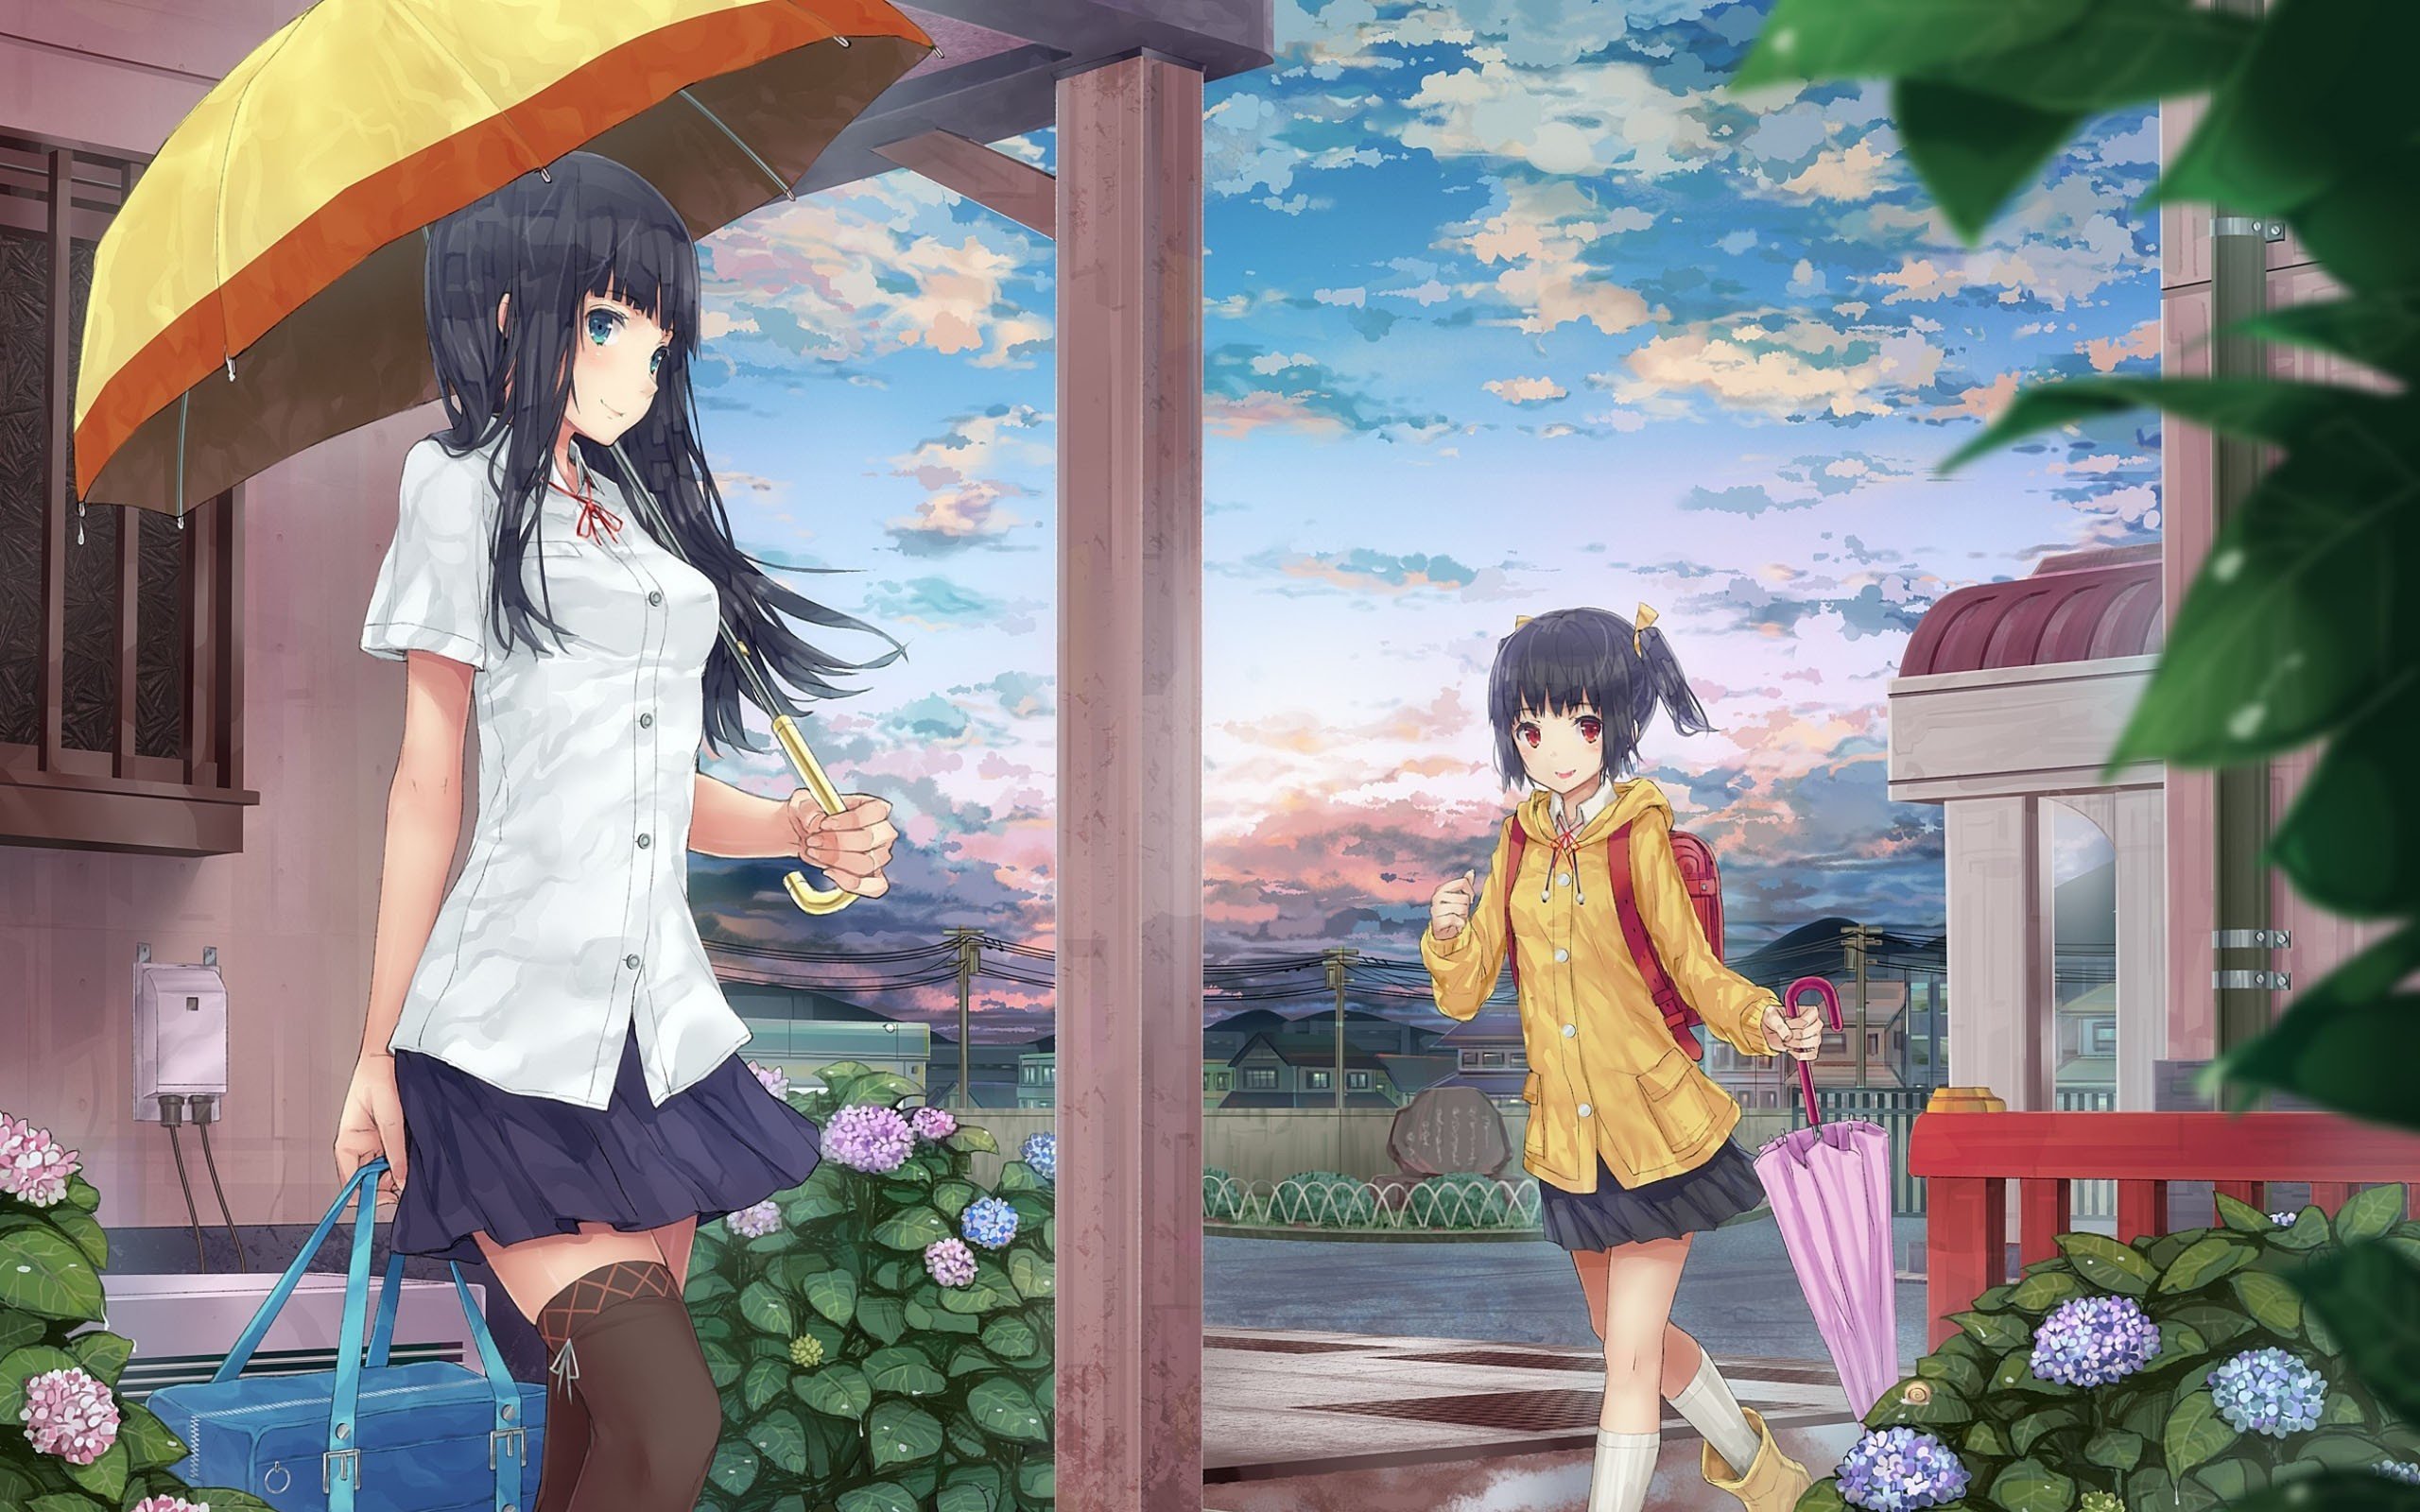 clouds, Rain, Flowers, School, Uniforms, Umbrellas, Anime, Girls, Sky, Upscaled Wallpaper